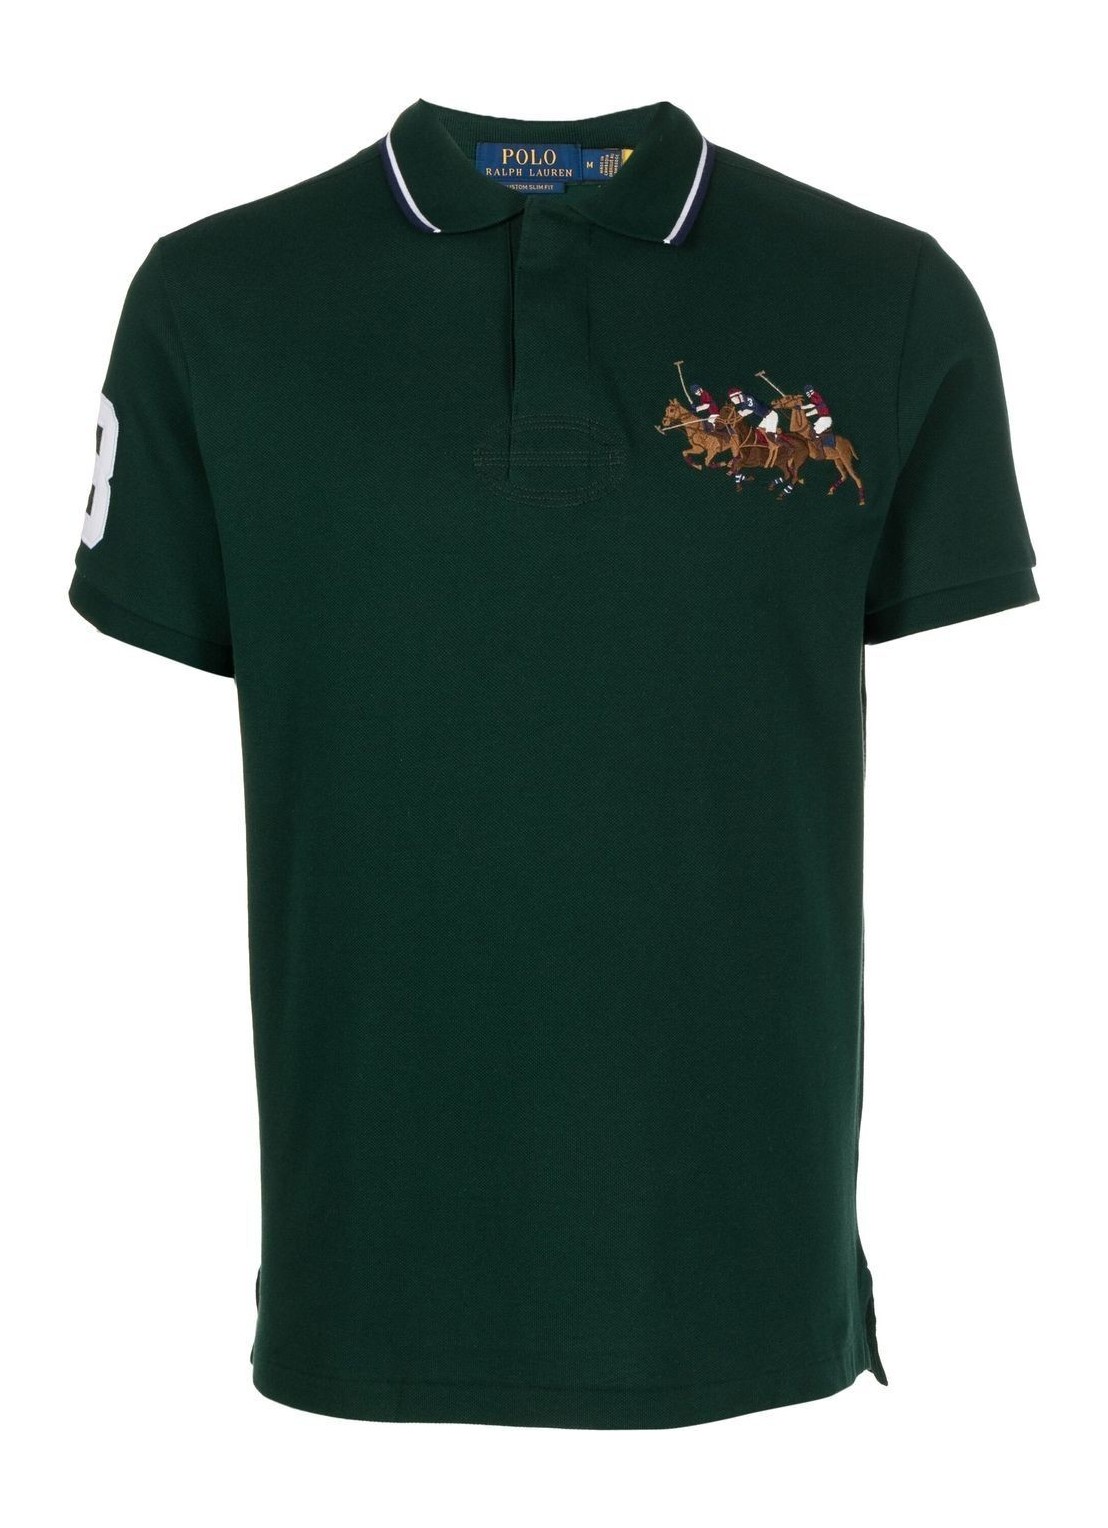 Polo polo ralph lauren polo man sskccmslm11-short sleeve-polo shirt 710900614004 college green talla